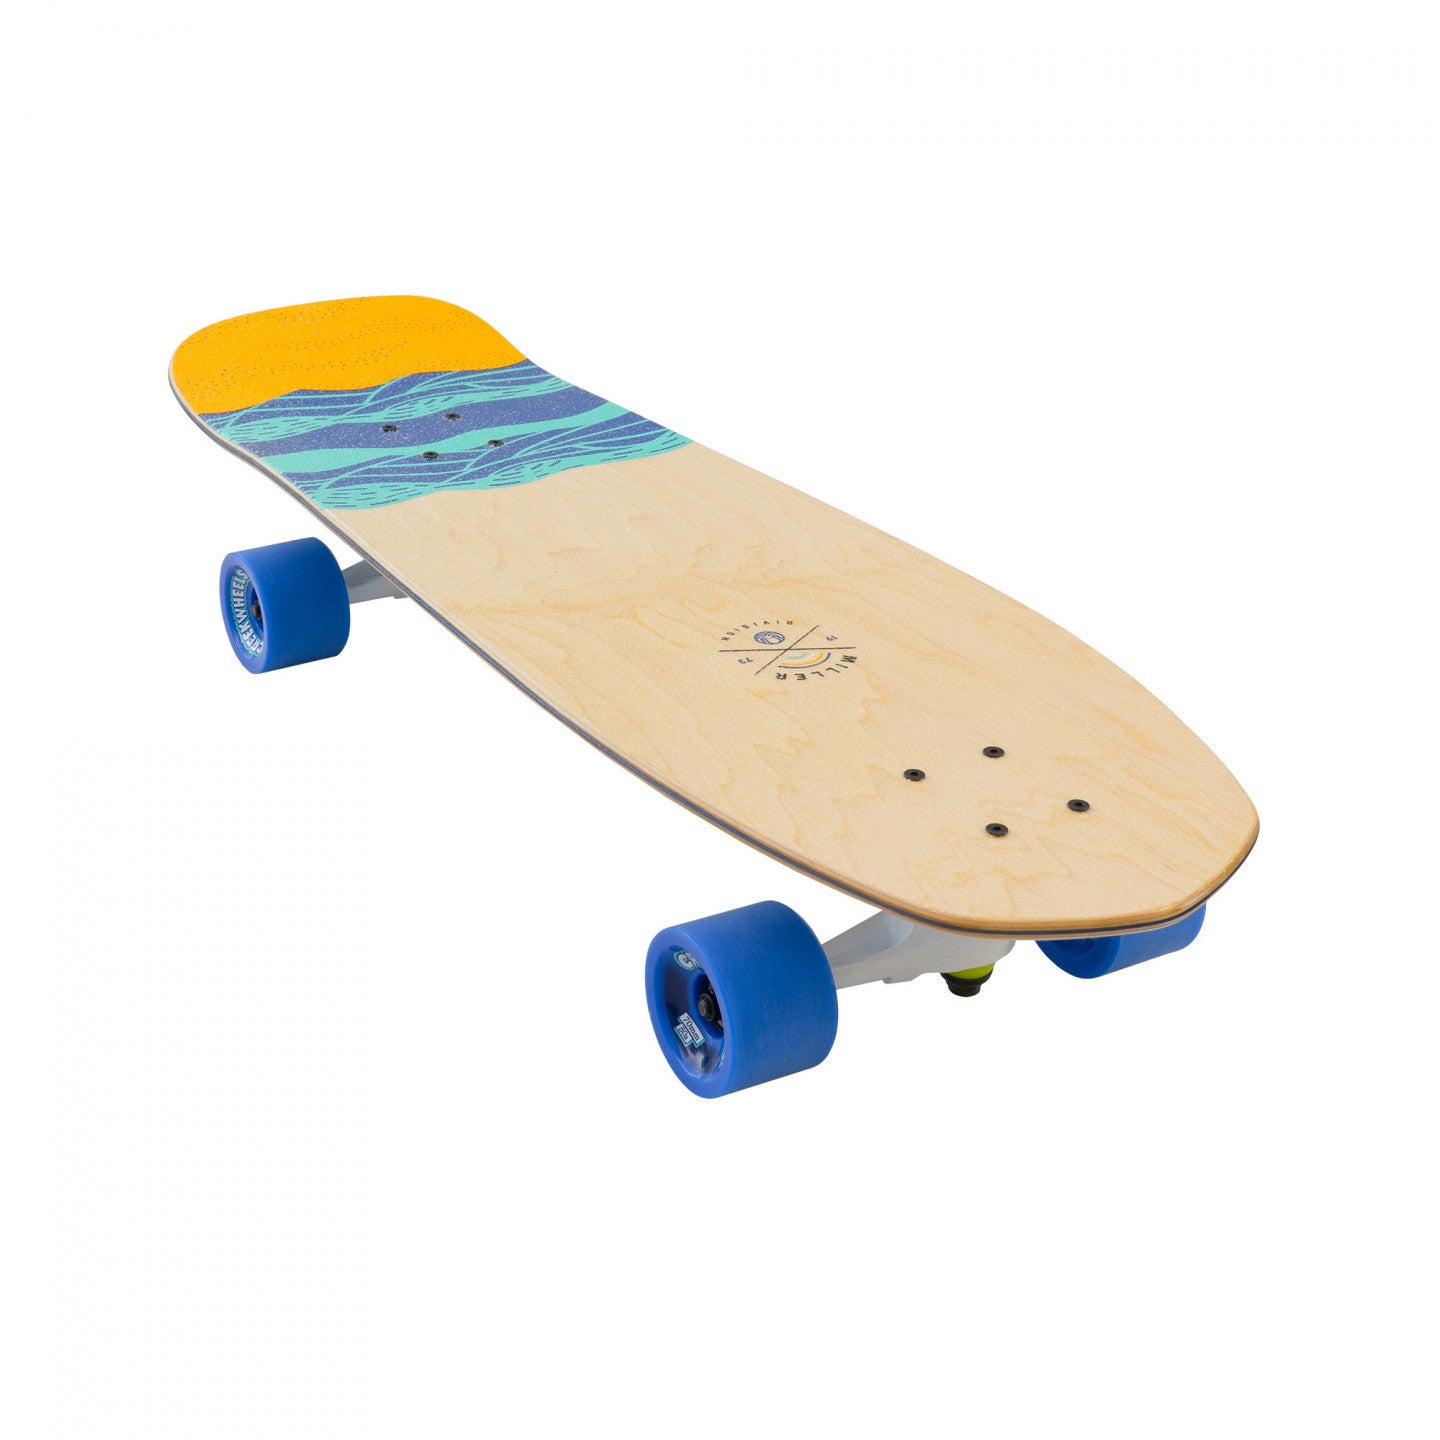 casque skateboard miller division - surf city surfshop lacanau